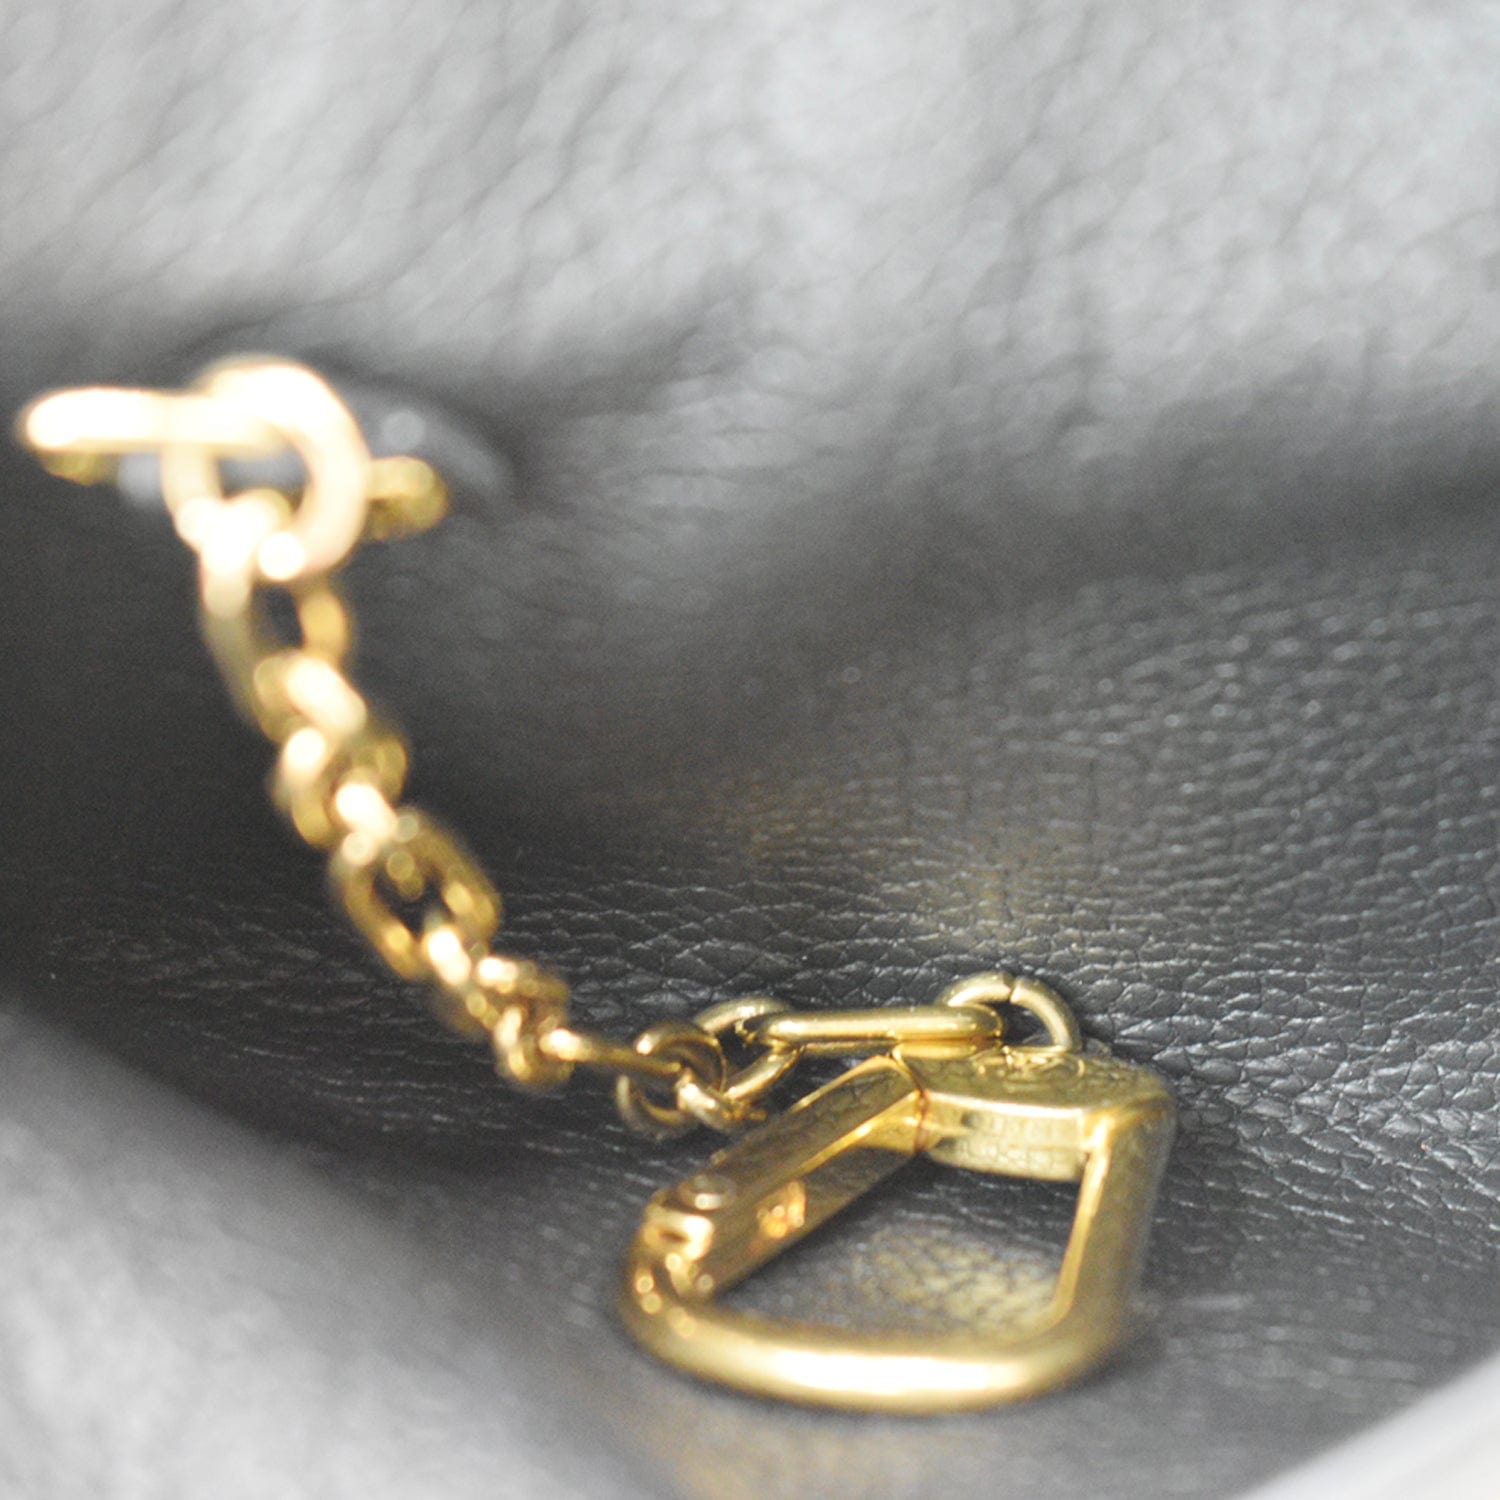 Louis Vuitton Key Pouch Monogram Empreinte Leather Black 1412752